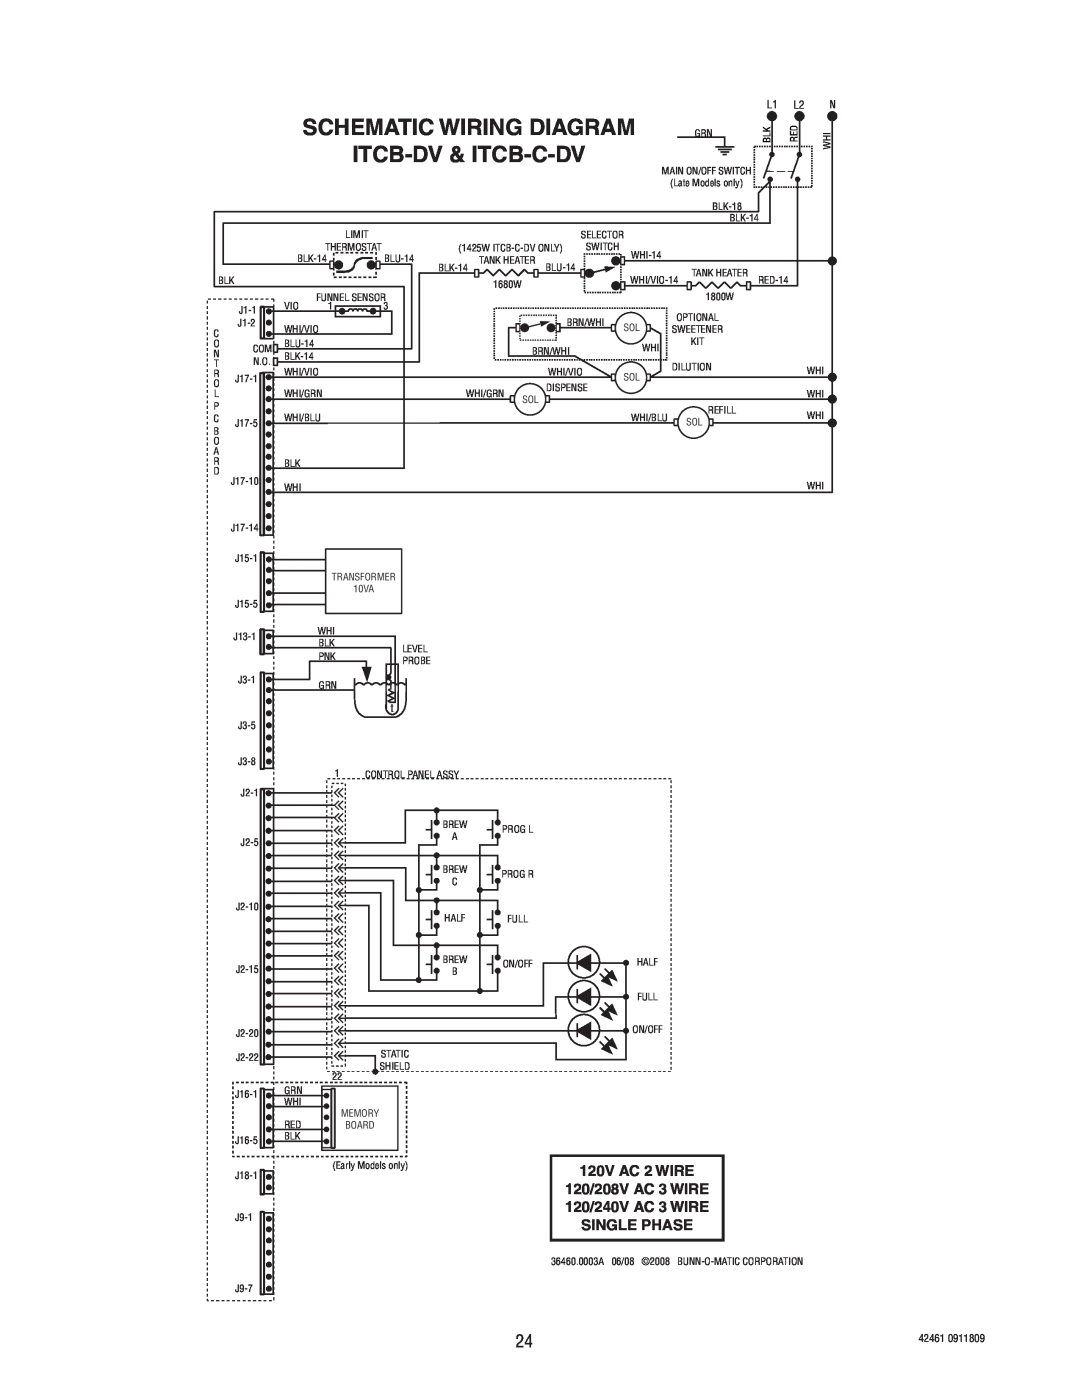 Bunn ICB/TWIN manual Schematic Wiring Diagram, Itcb-Dv & Itcb-C-Dv, 120V AC 2 WIRE, 120/208V AC 3 WIRE, 120/240V AC 3 WIRE 